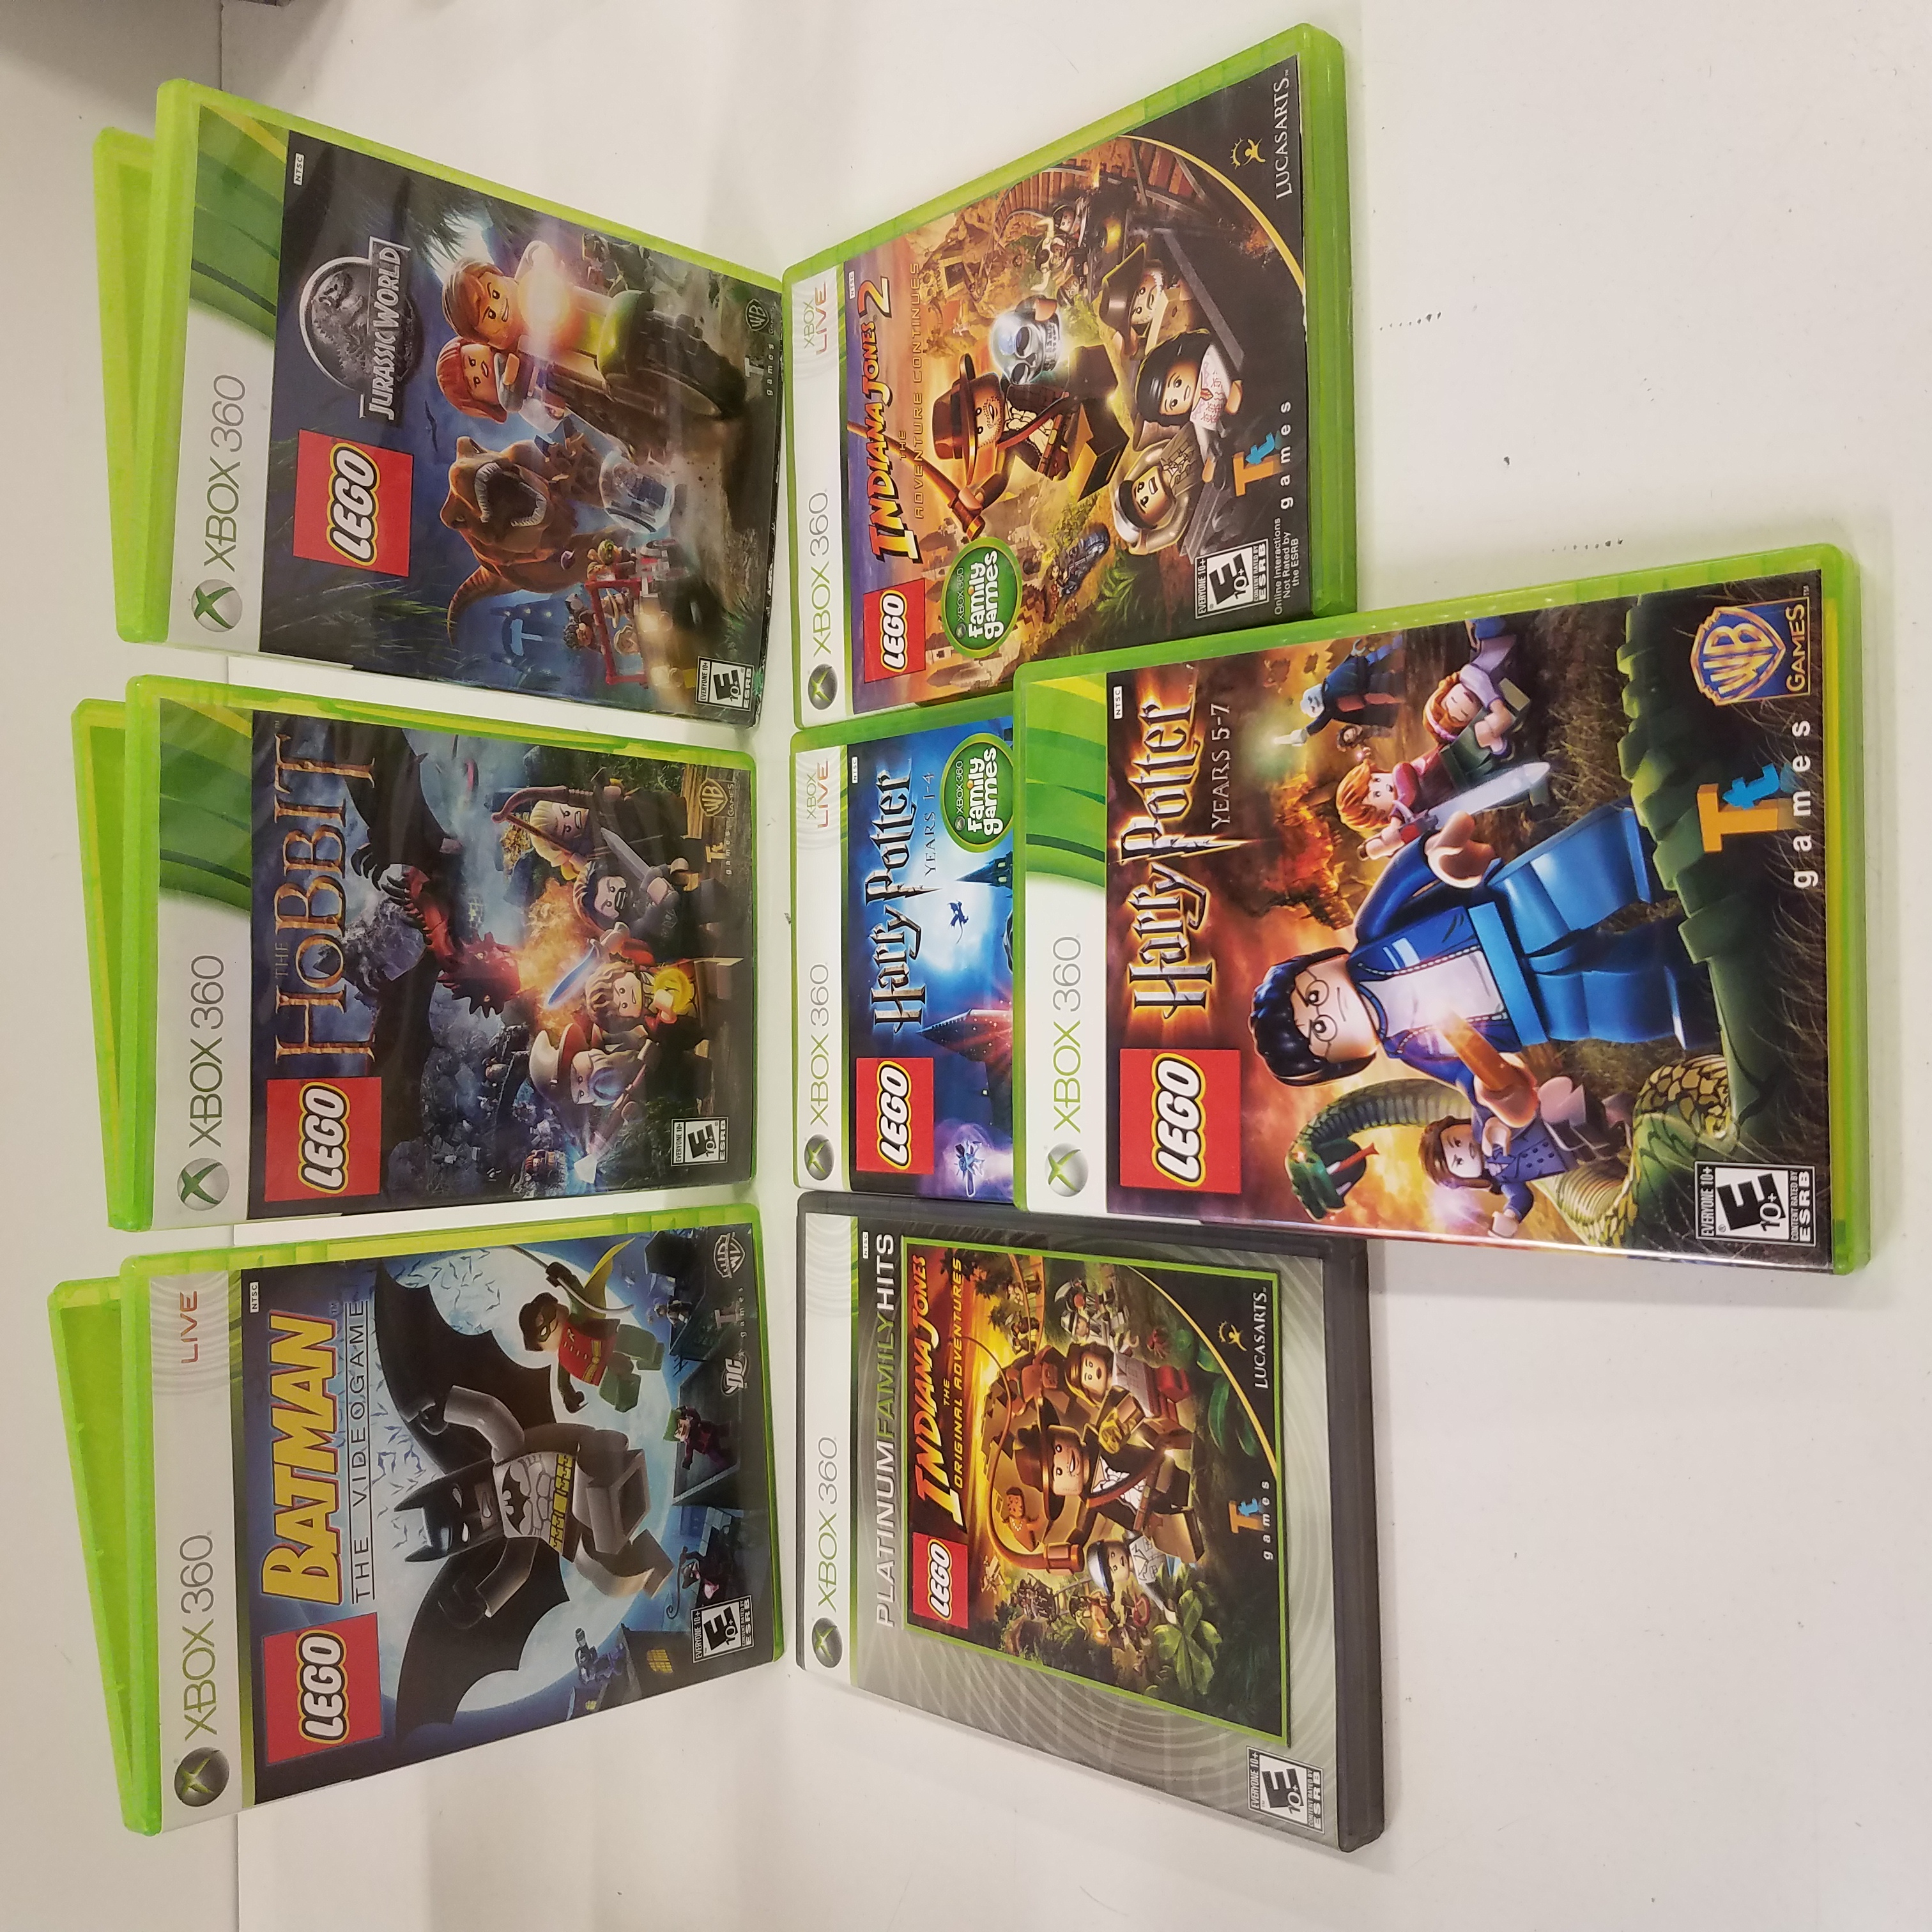 Bouwen blok single Buy the Lego Video Game Bundle - Xbox 360 | GoodwillFinds